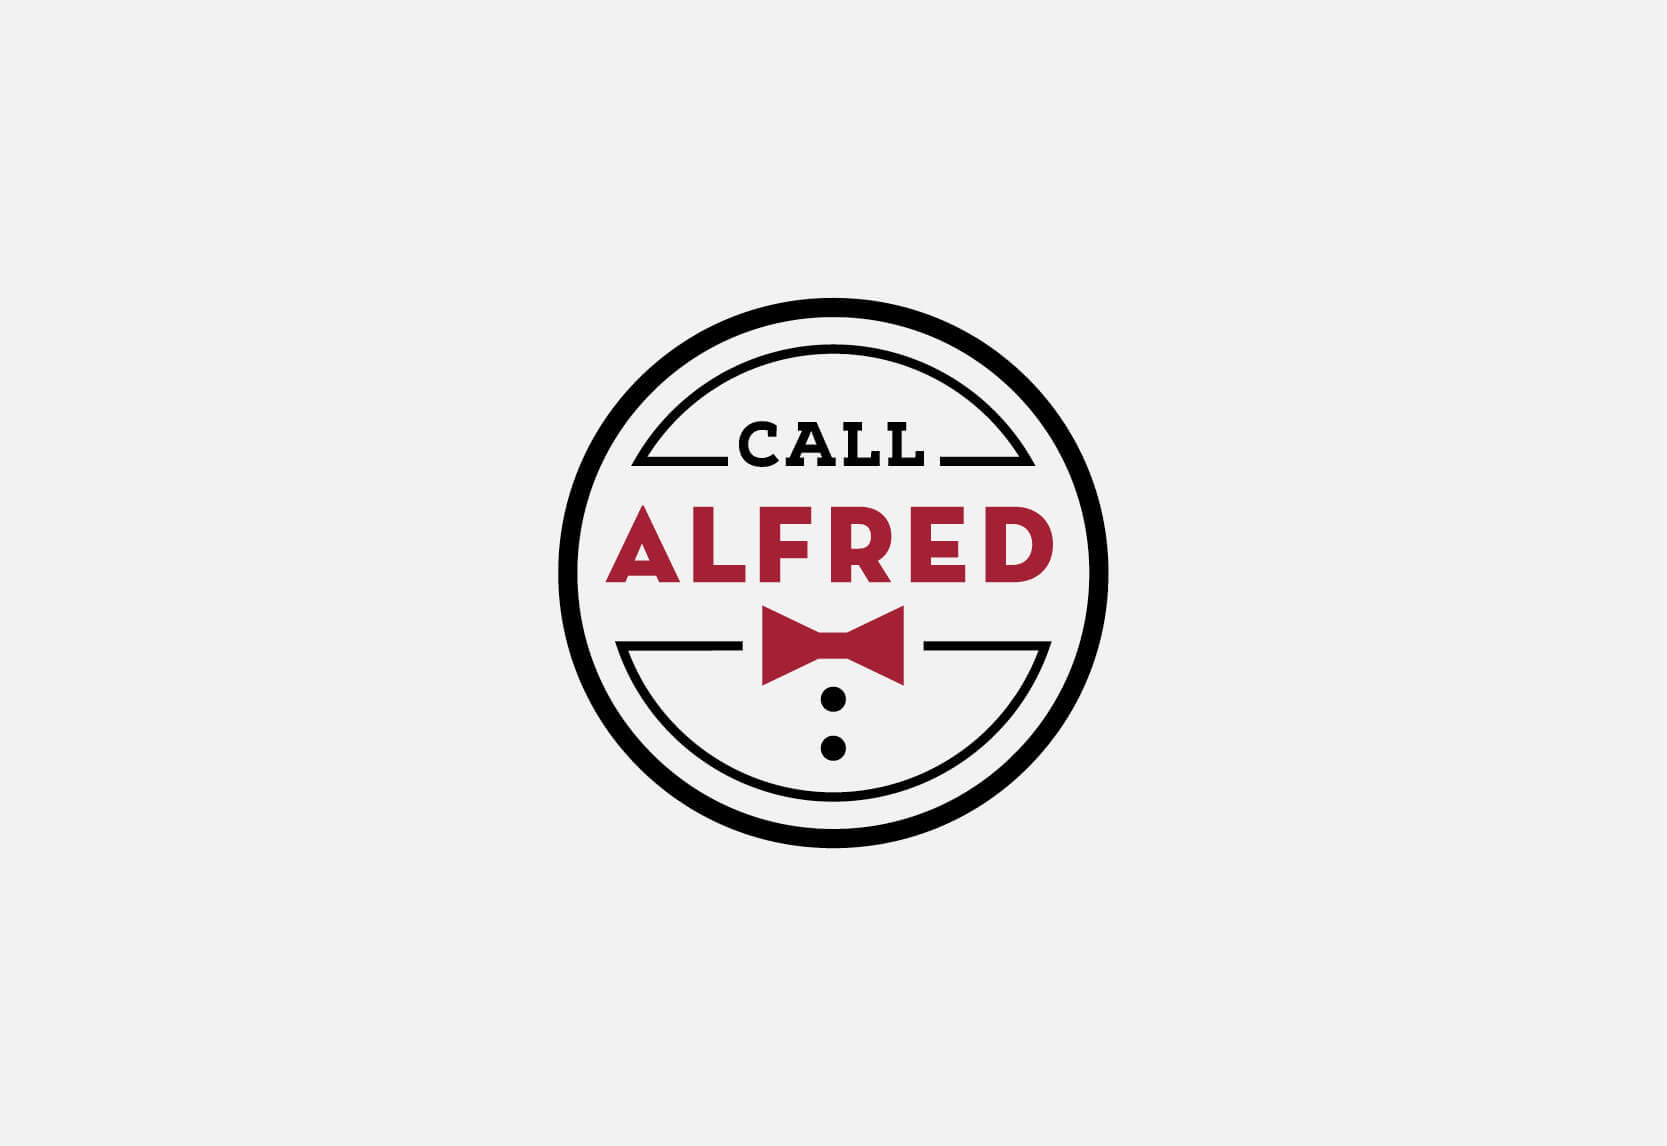 Call Alfred logo